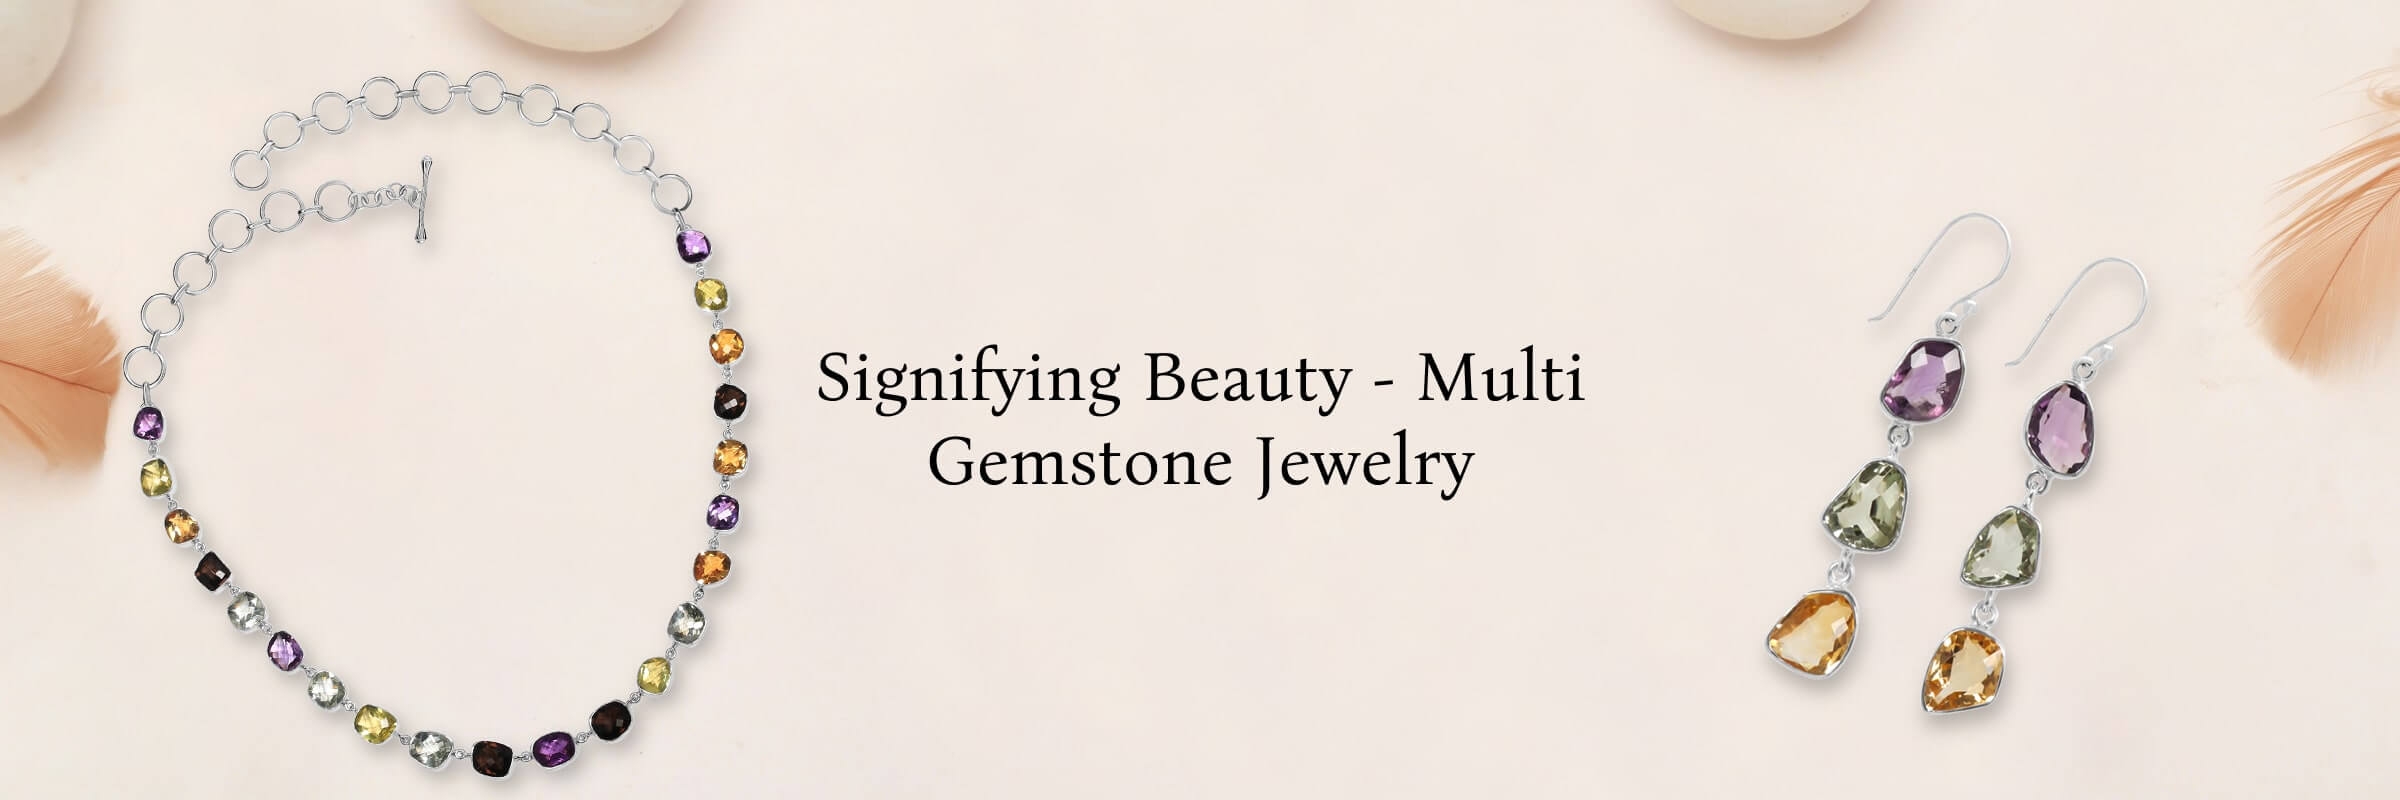 Representative Implications of Multi Gemstone Jewelry